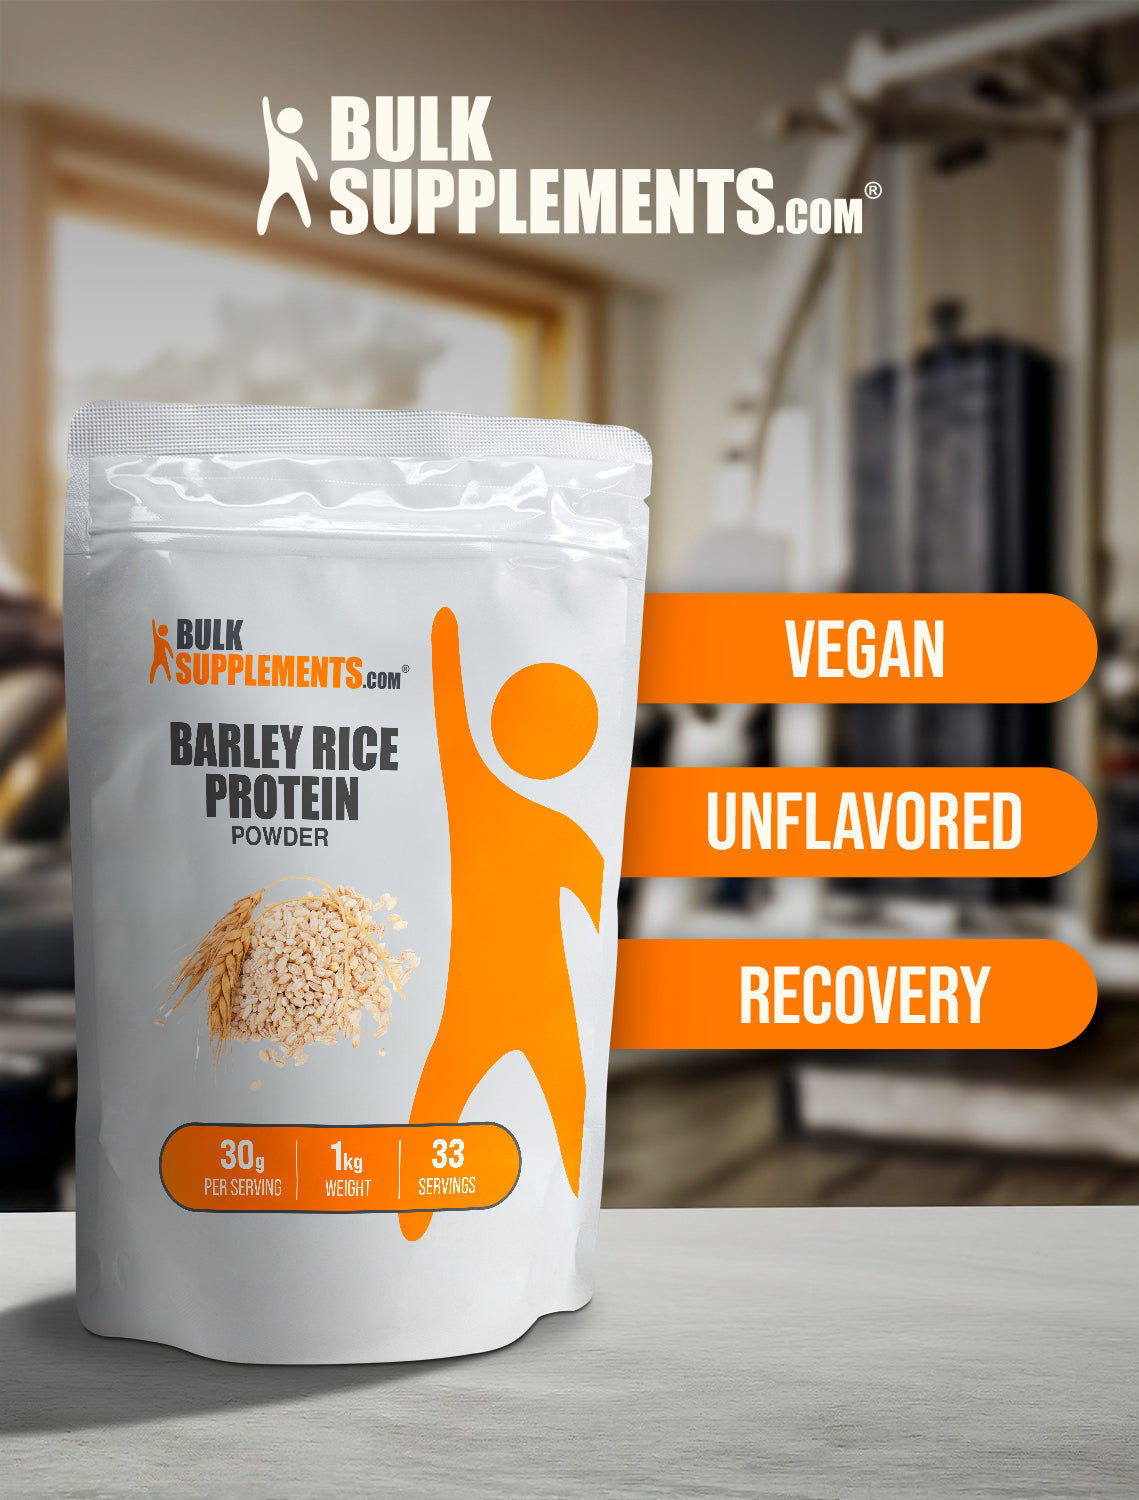 Barley rice protein powder 1kg keywords image